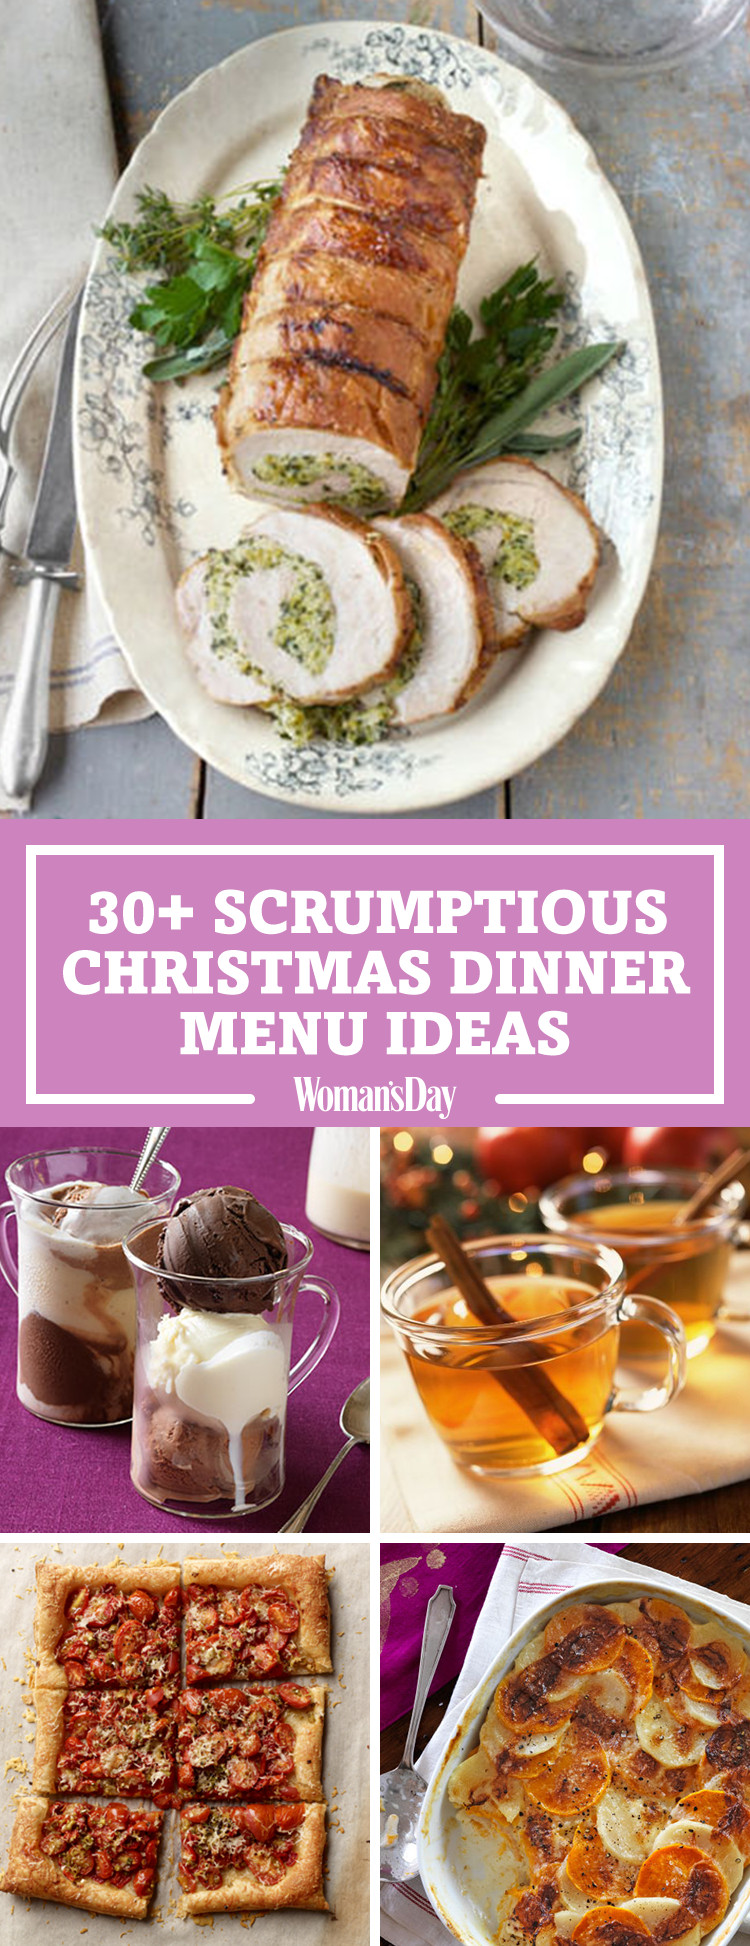 Christmas Day Dinner Ideas
 Best Christmas Dinner Menu Ideas for 2017